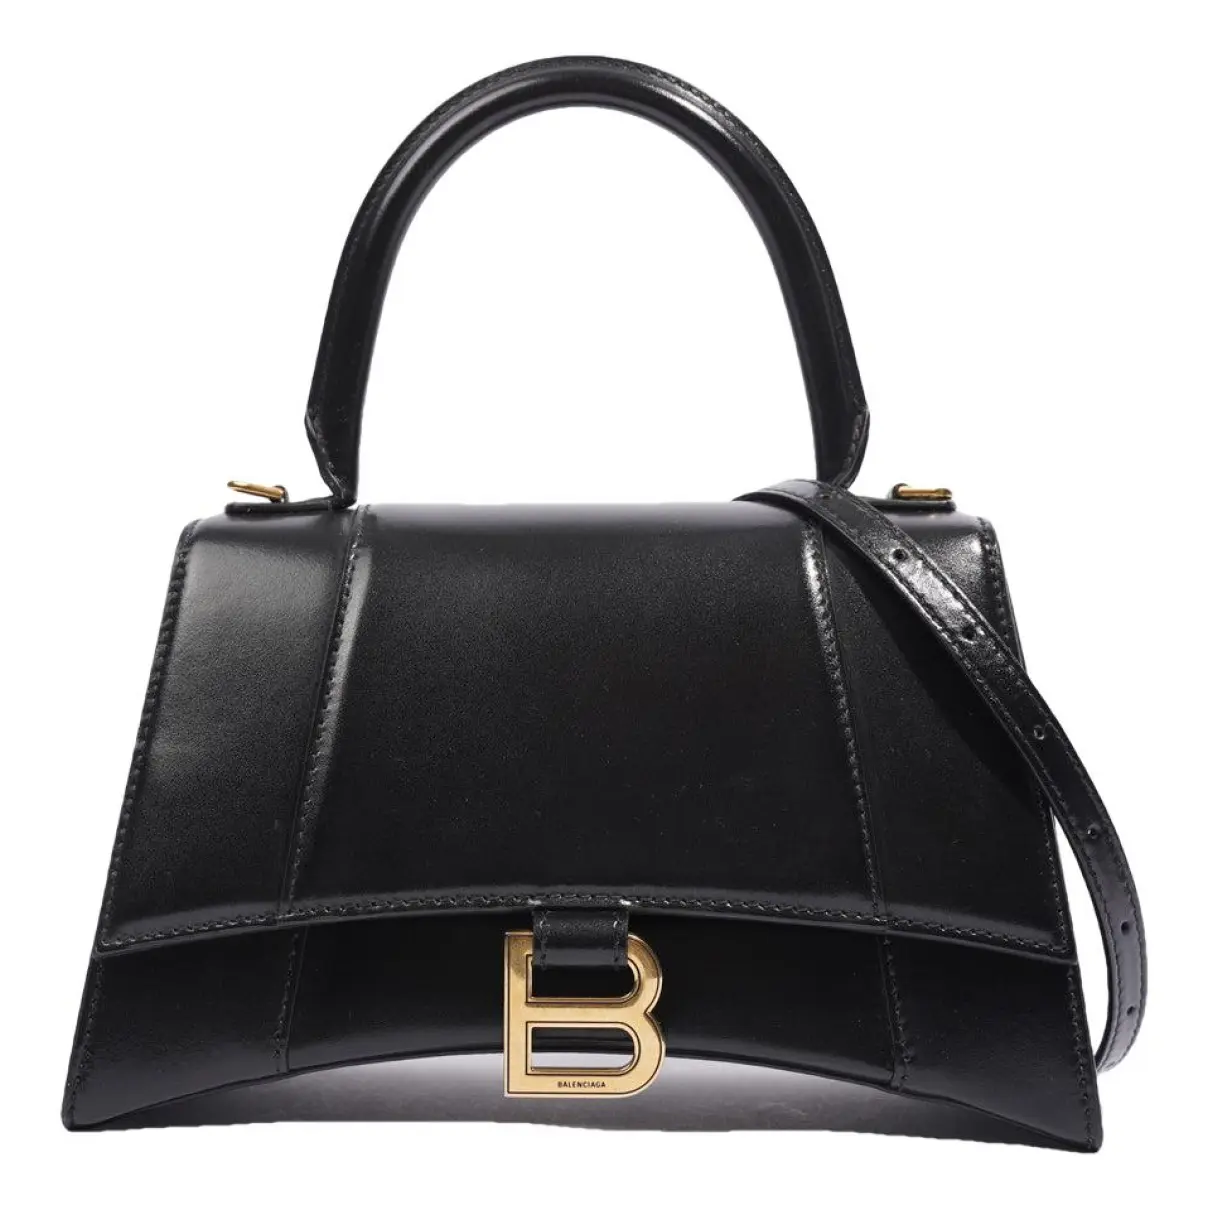 Hourglass leather handbag